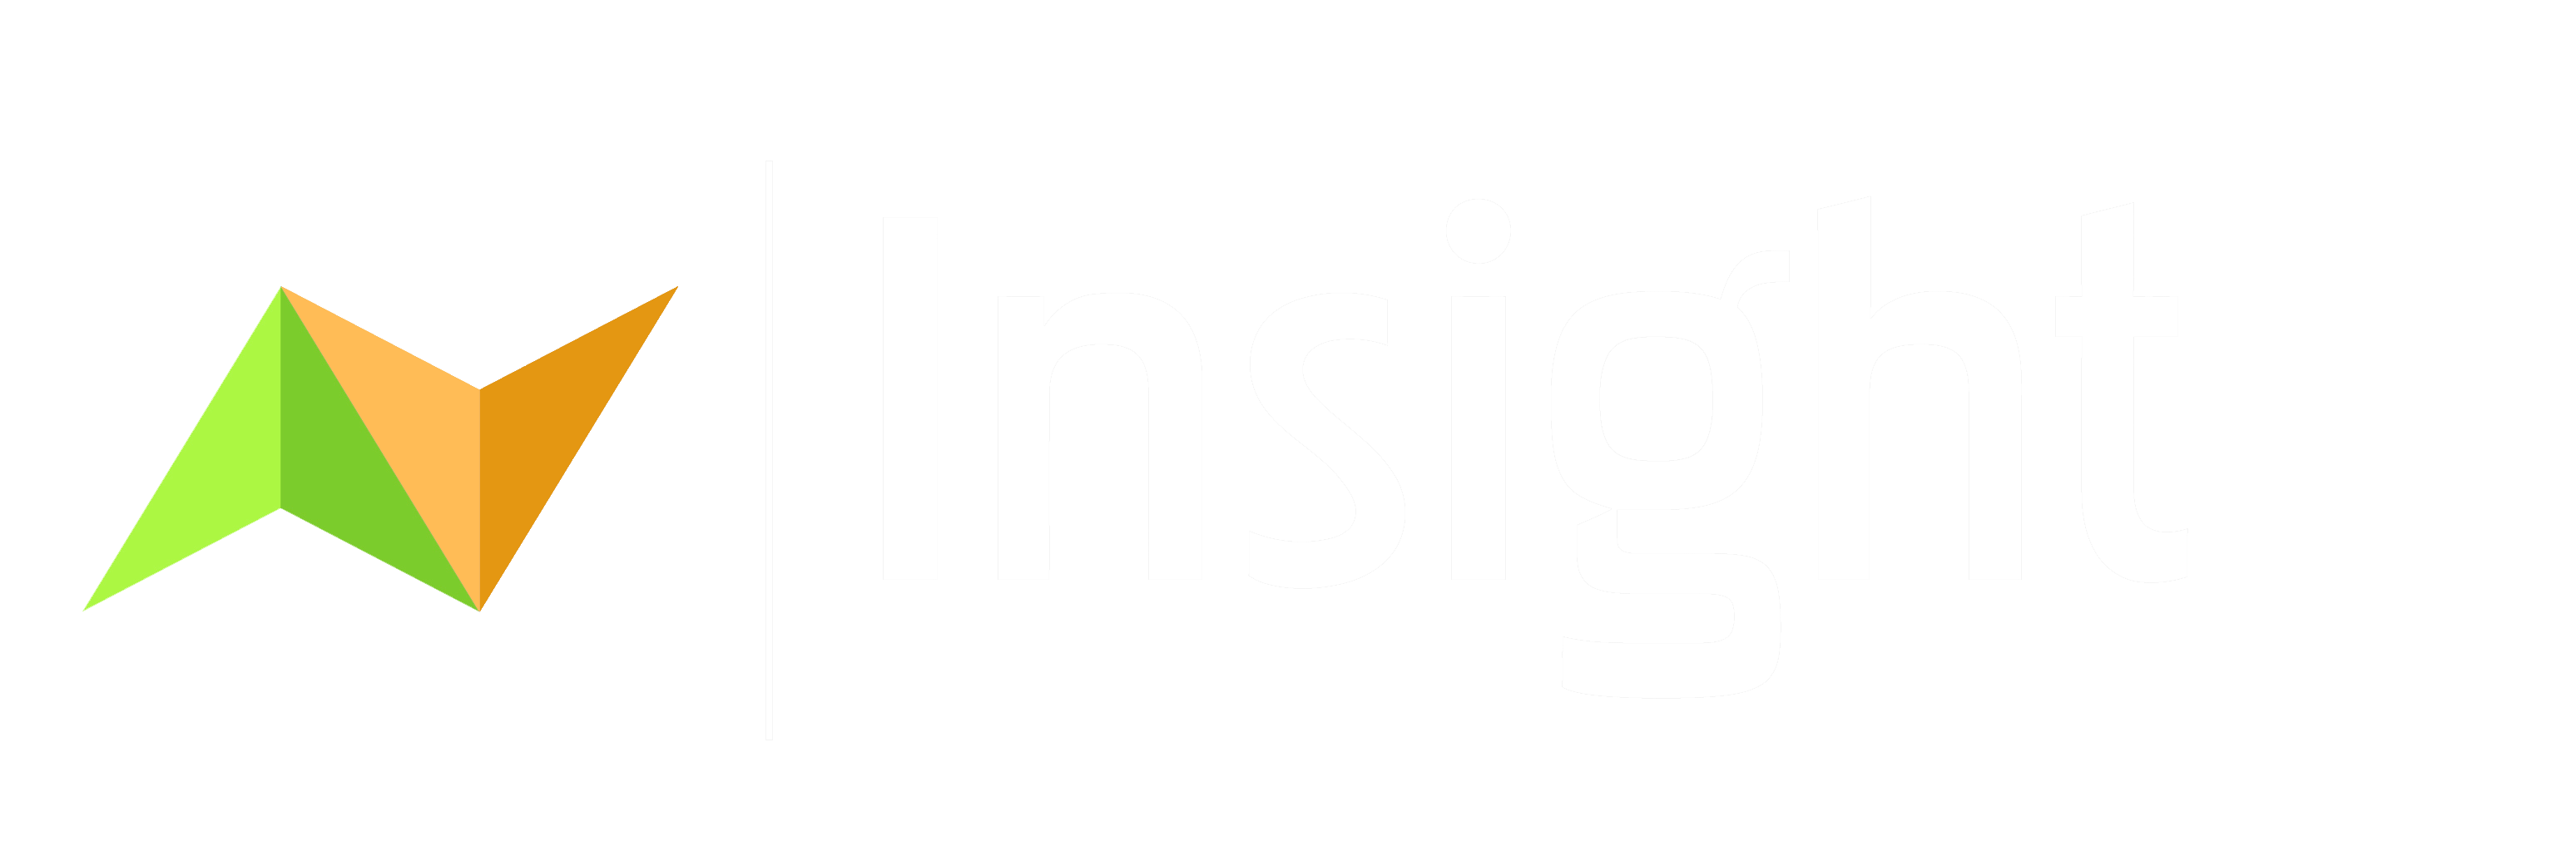 Insight Portage